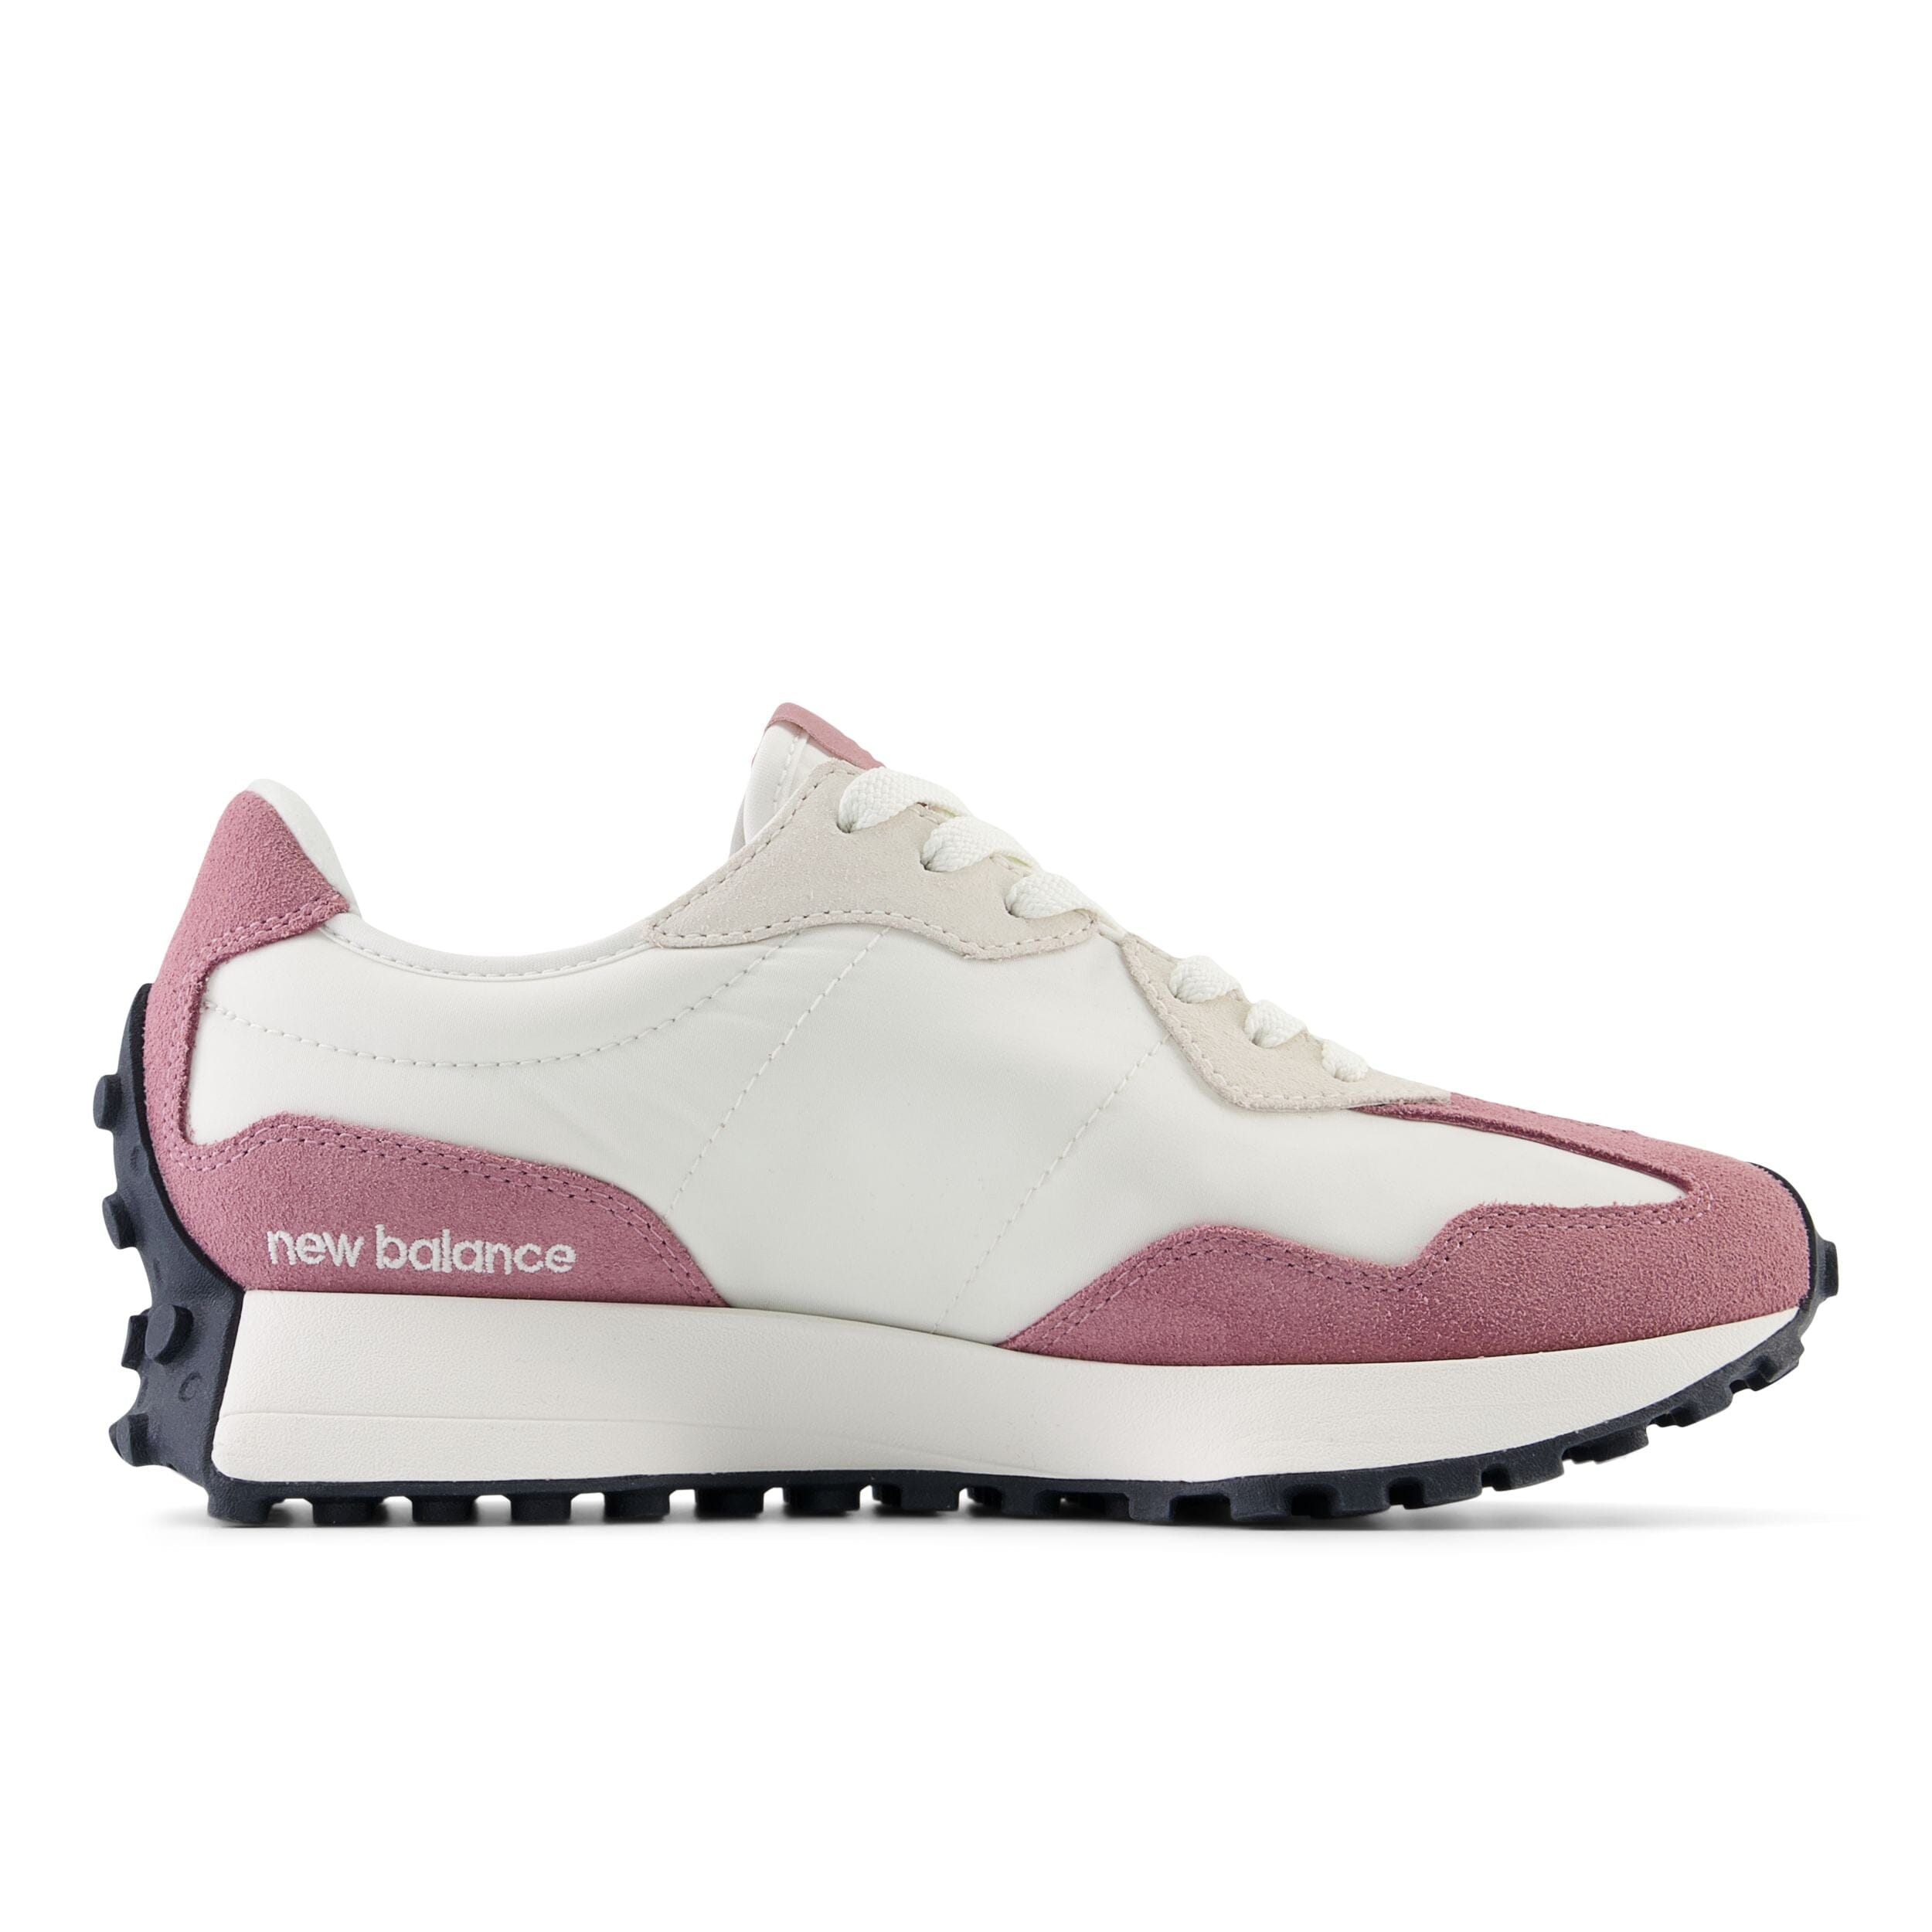 NEW BALANCE - Sneakers WS327MB - Bianco Rosa Scarpe Donna NEW BALANCE - Collezione Donna 